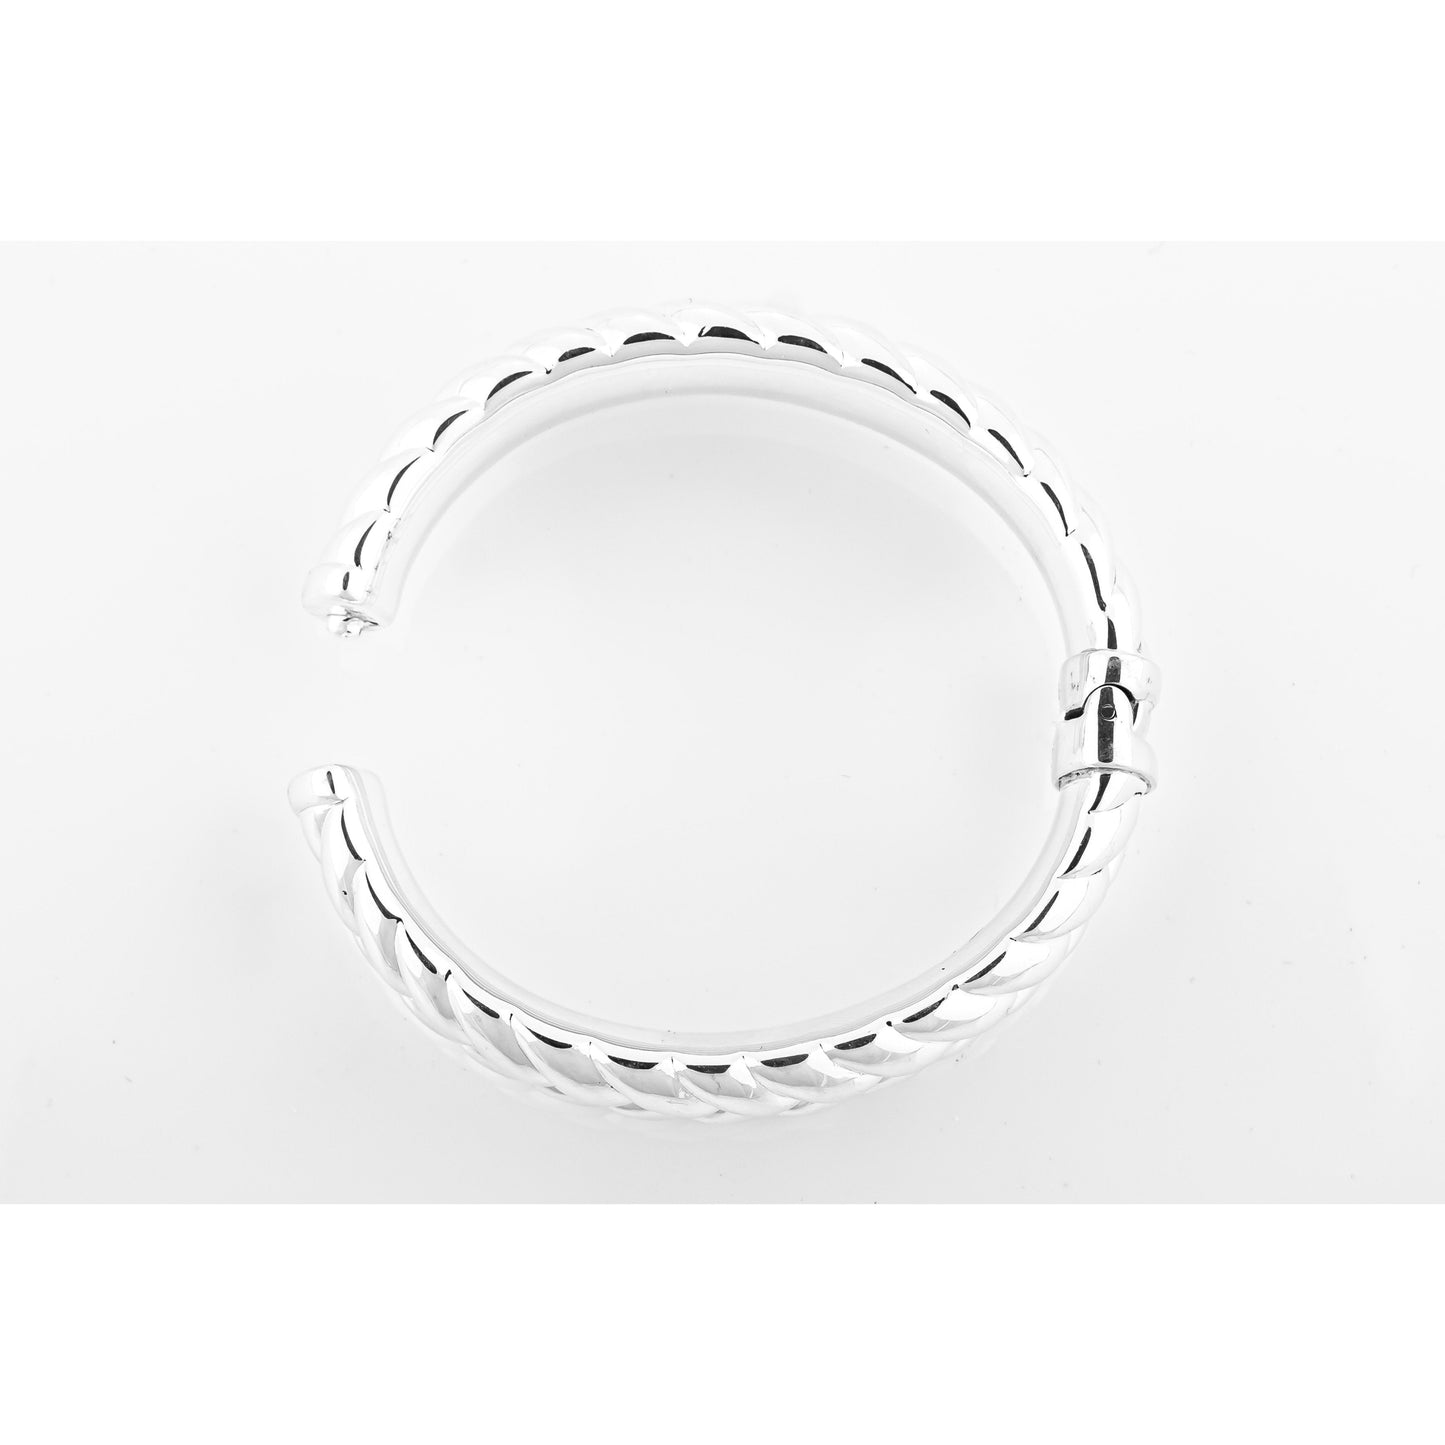 Silver bracelet on white background.